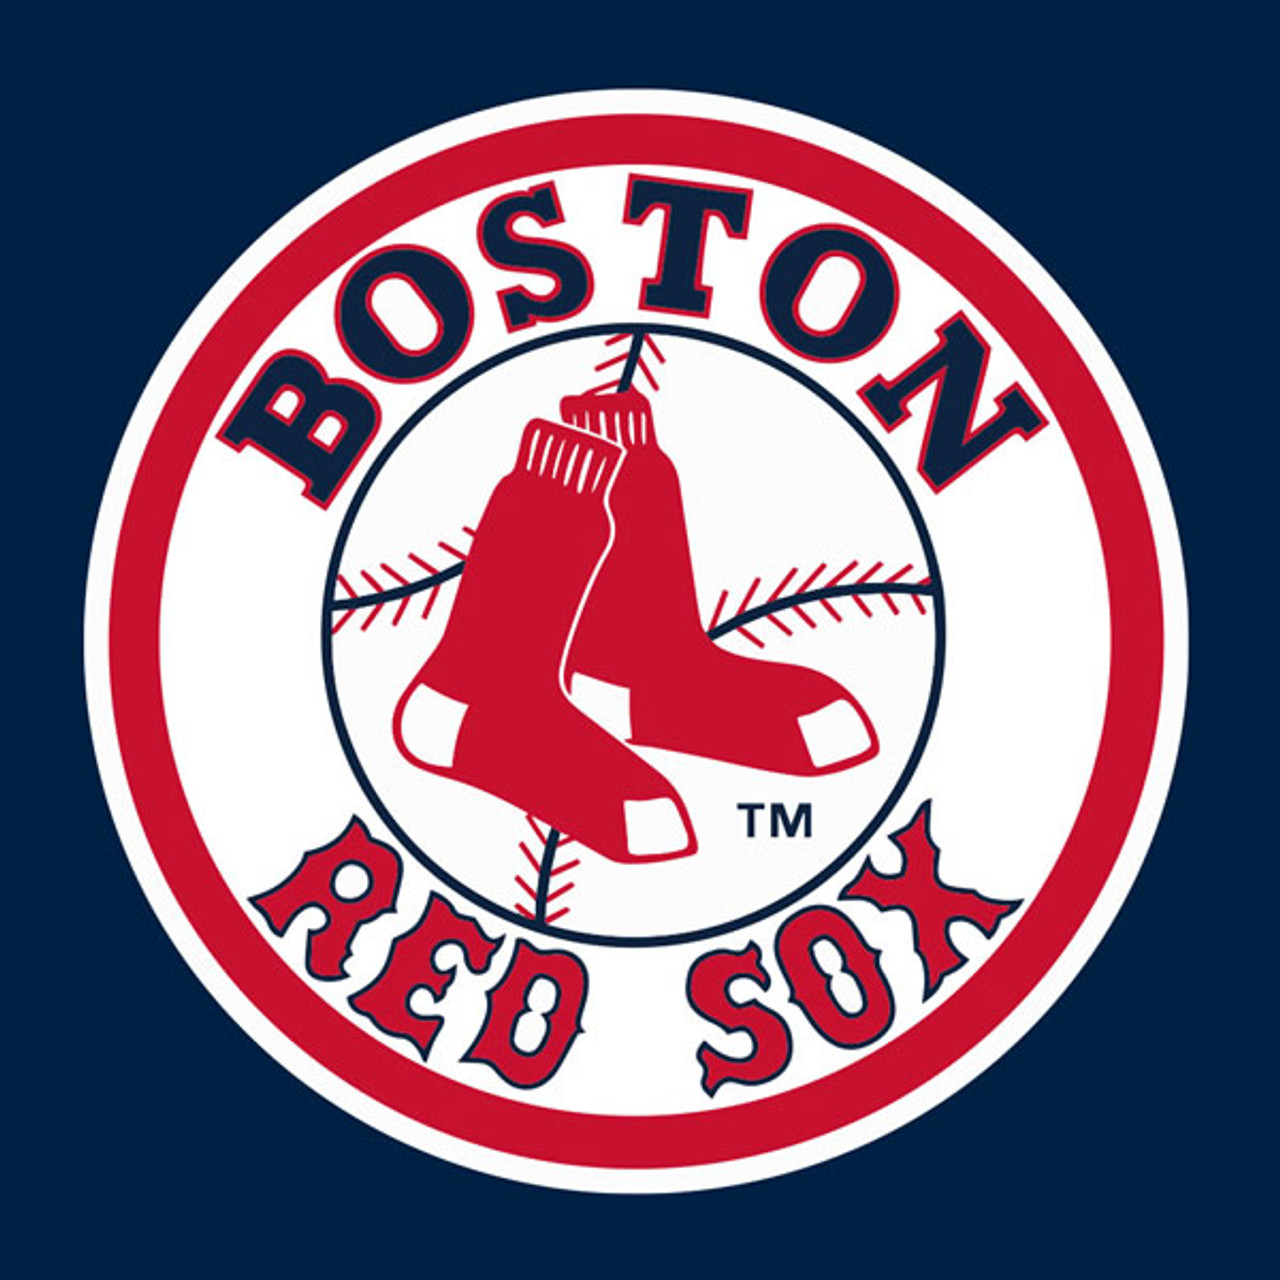 Jersey NInja - Boston Red Sox White Ted Williams Crossover Hockey Jersey